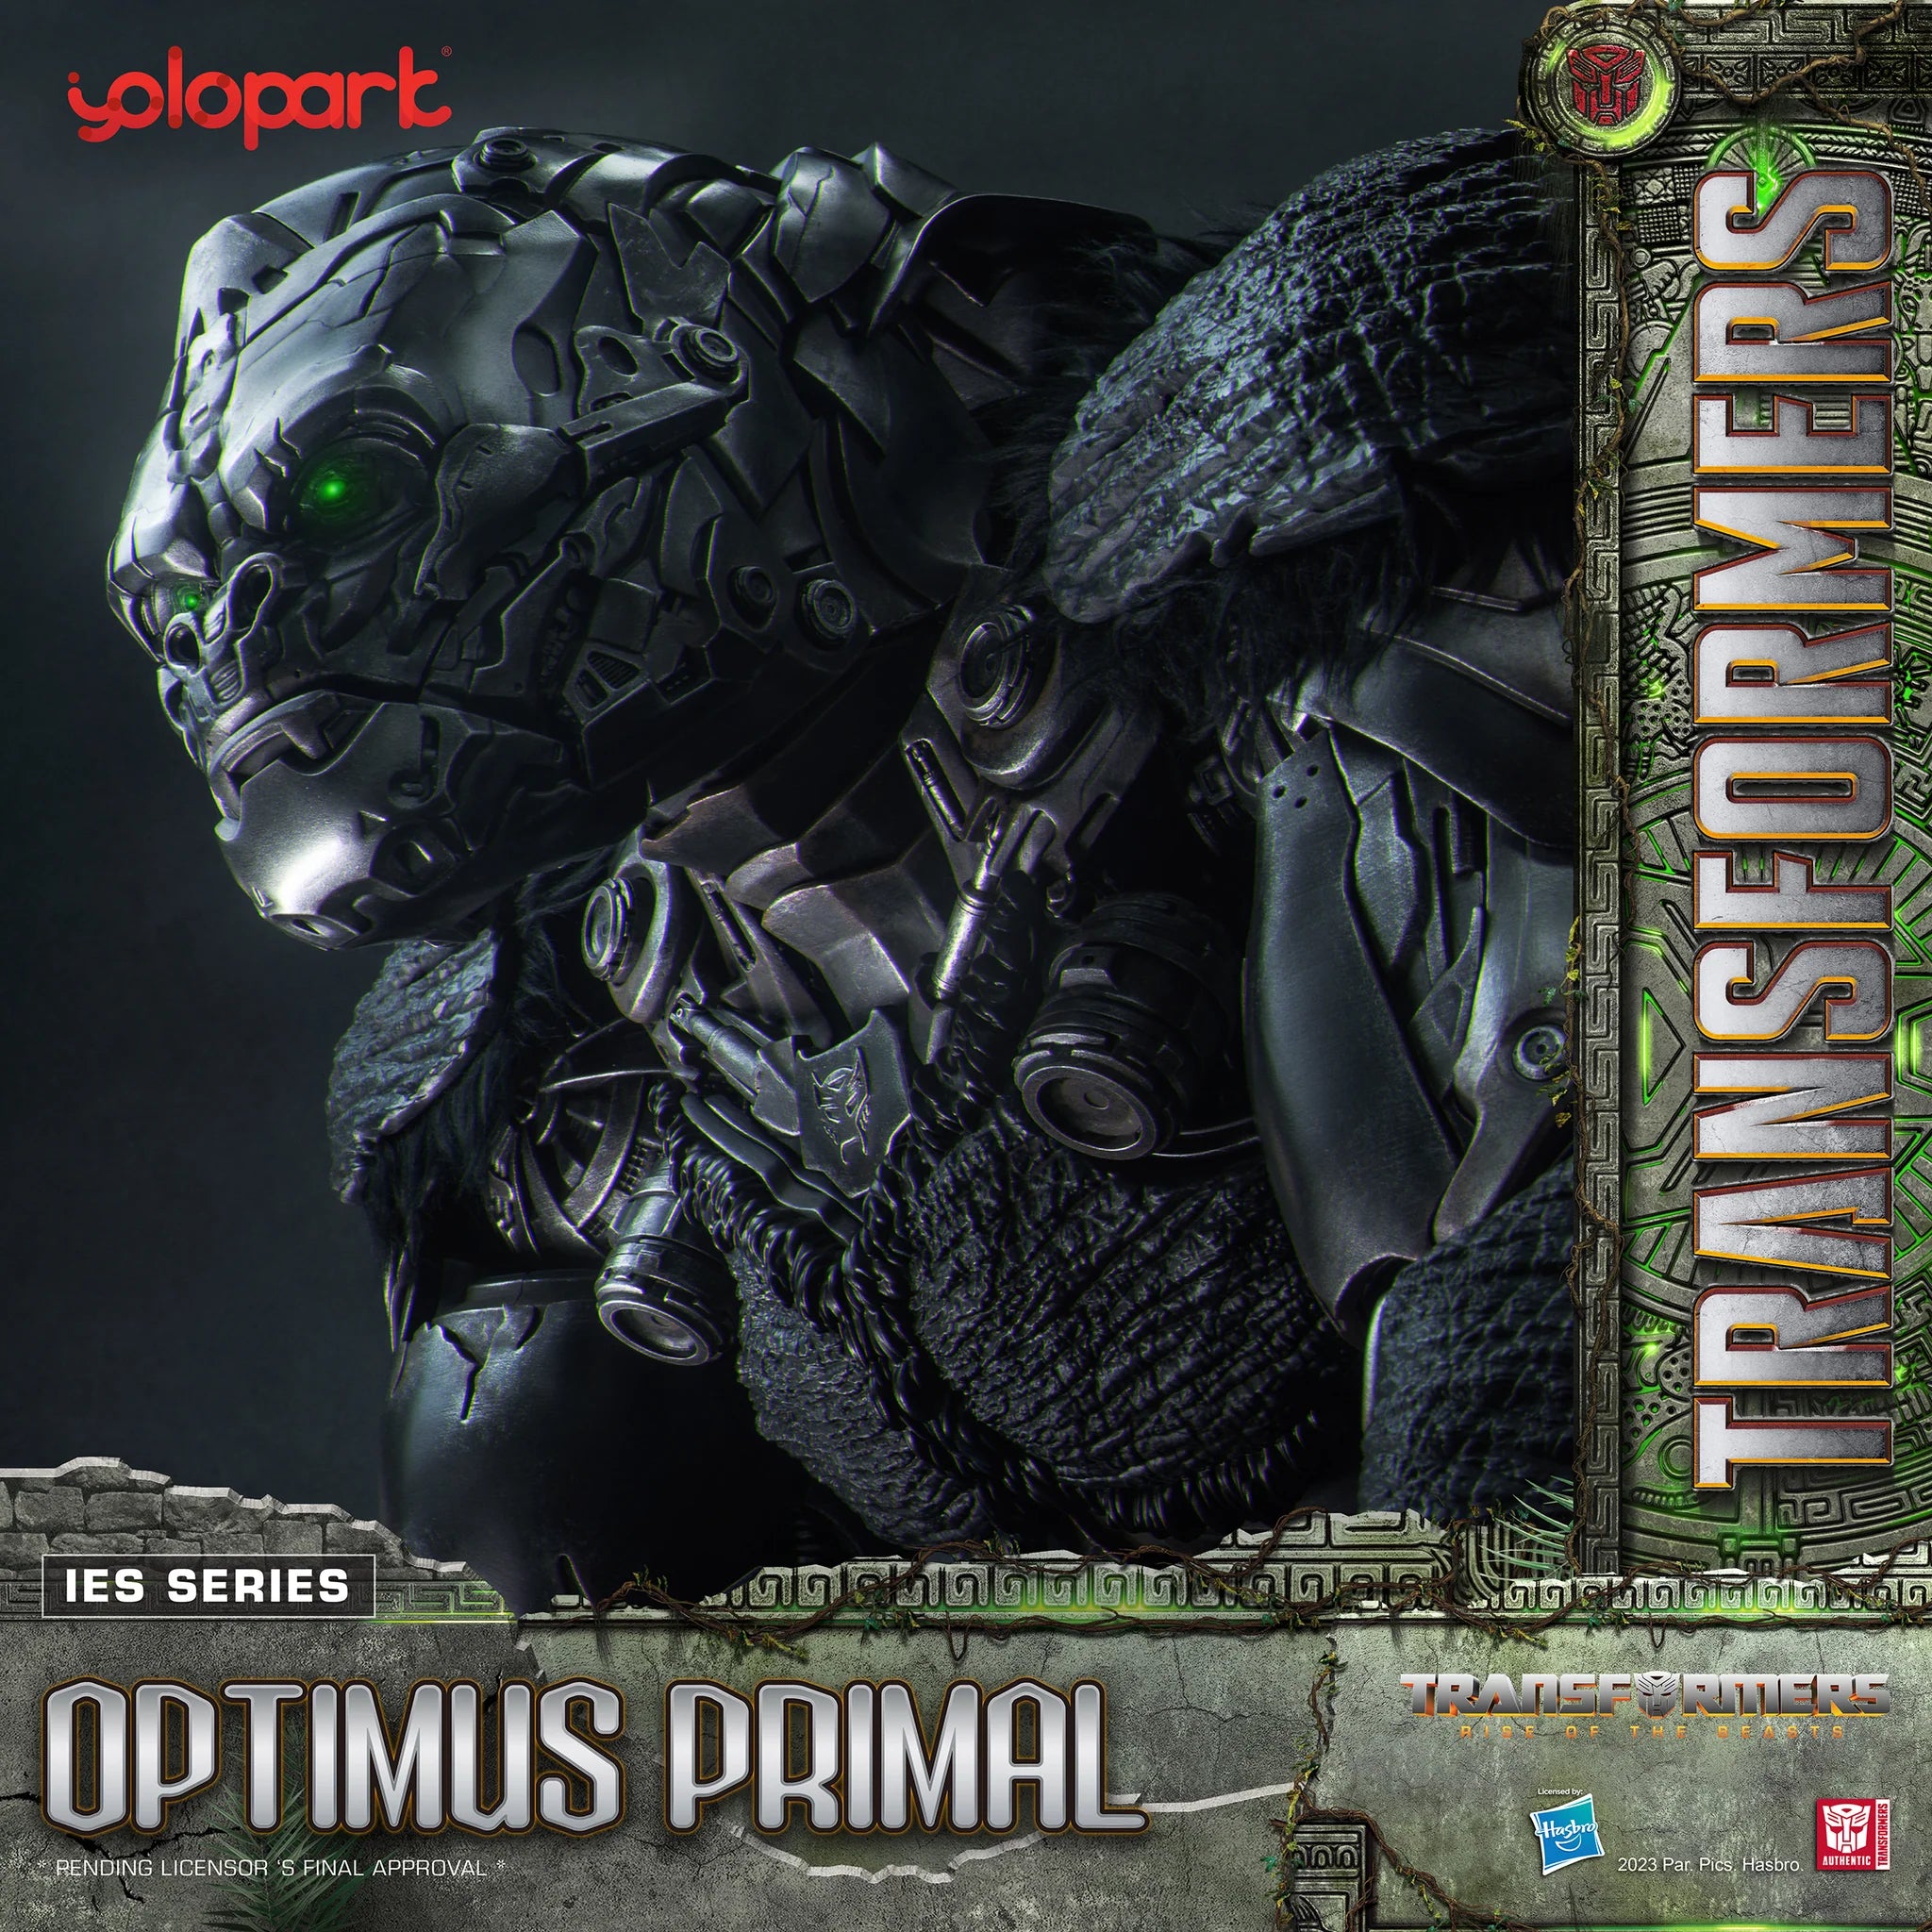 Yolopark - IES Series - Transformers: Rise of the Beasts - 62cm Optimus Primal (Standard Ver.) - Marvelous Toys